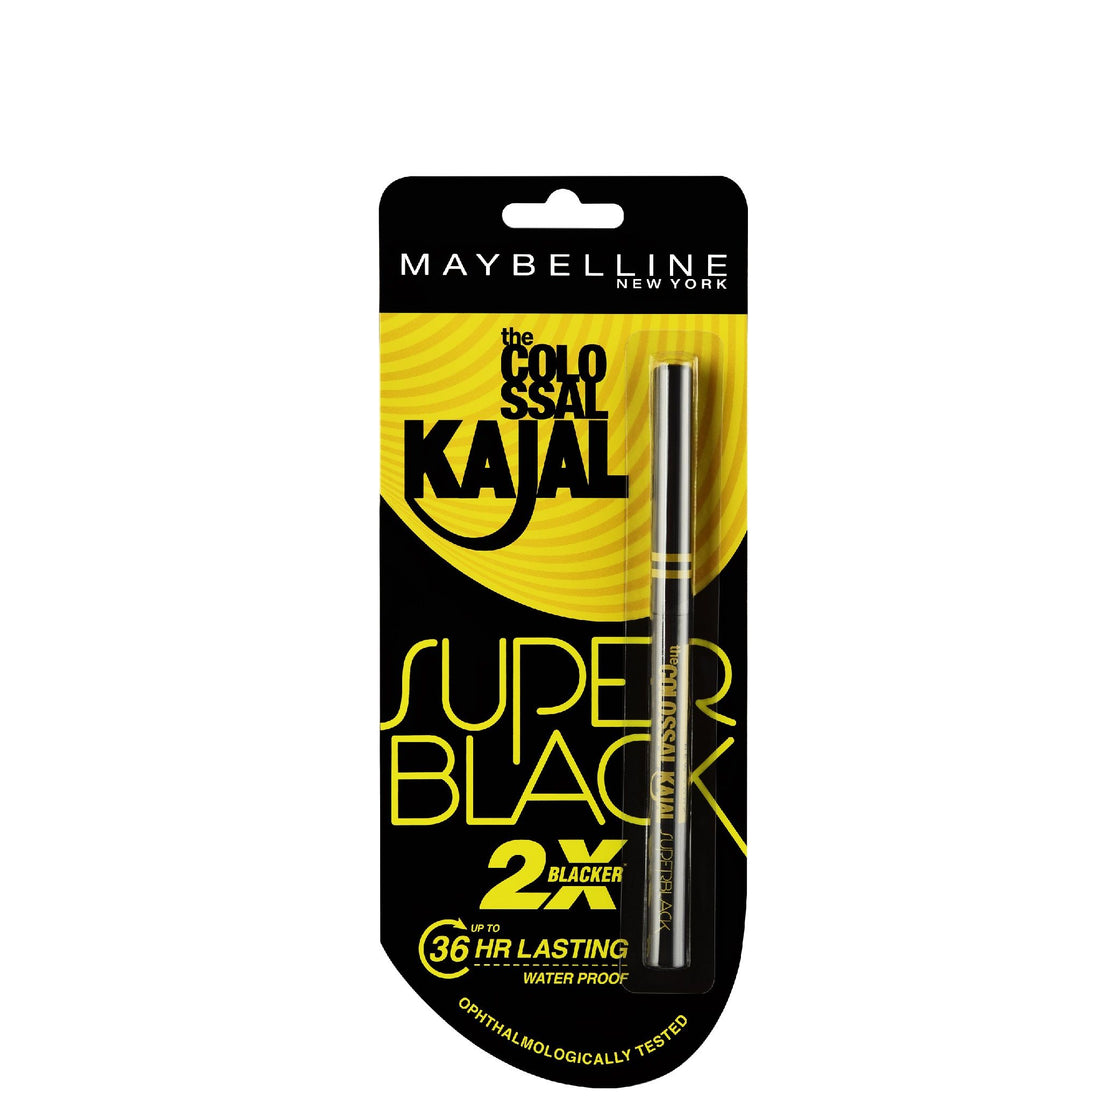 Maybelline New York Colossal Kajal Super Black